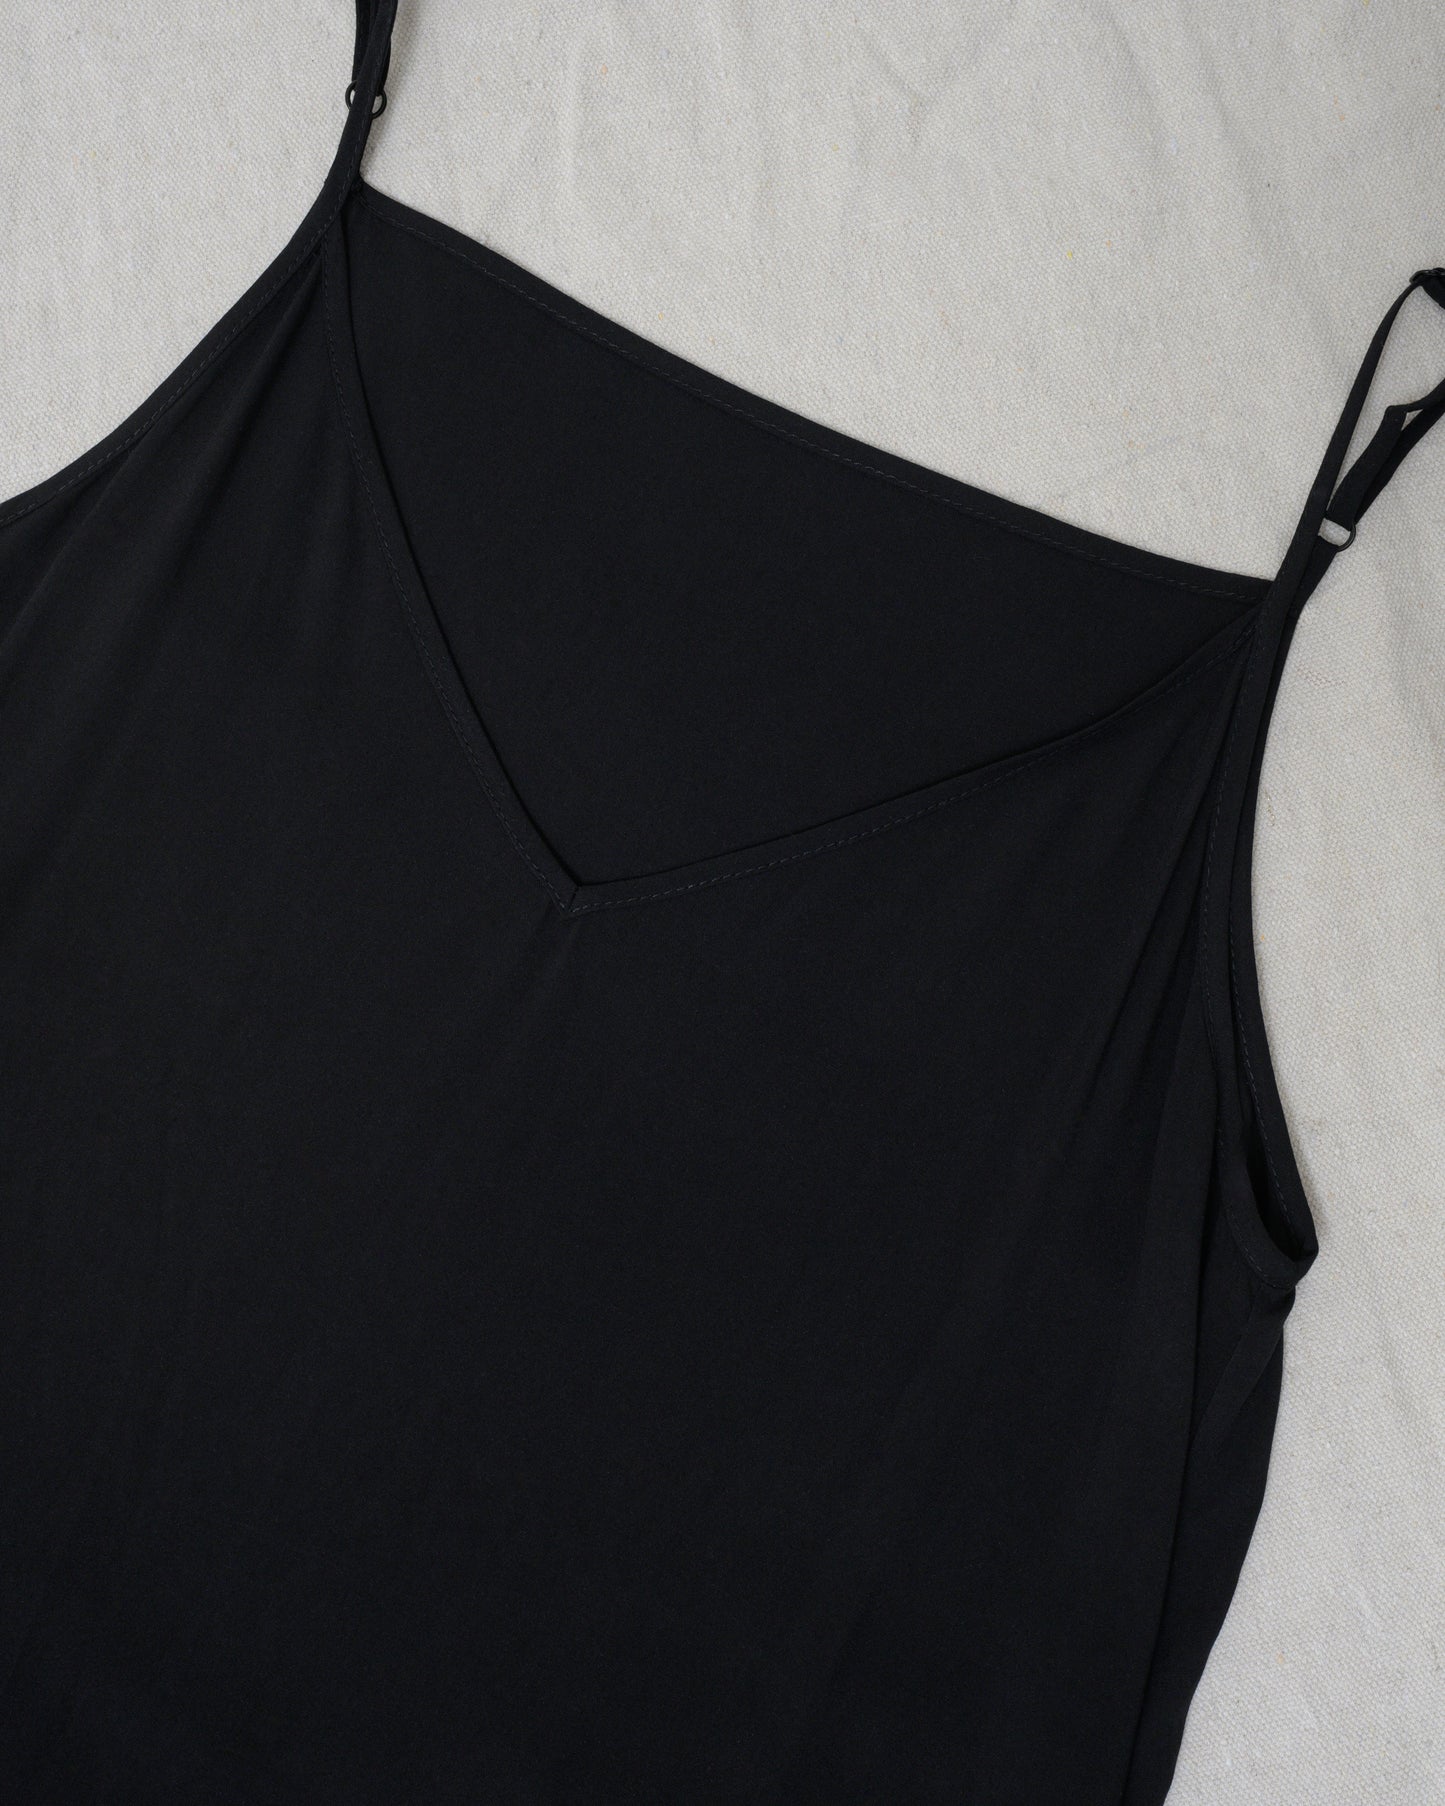 CLOSED CAPTION Black Slip SAMPLE Dress (S/M)